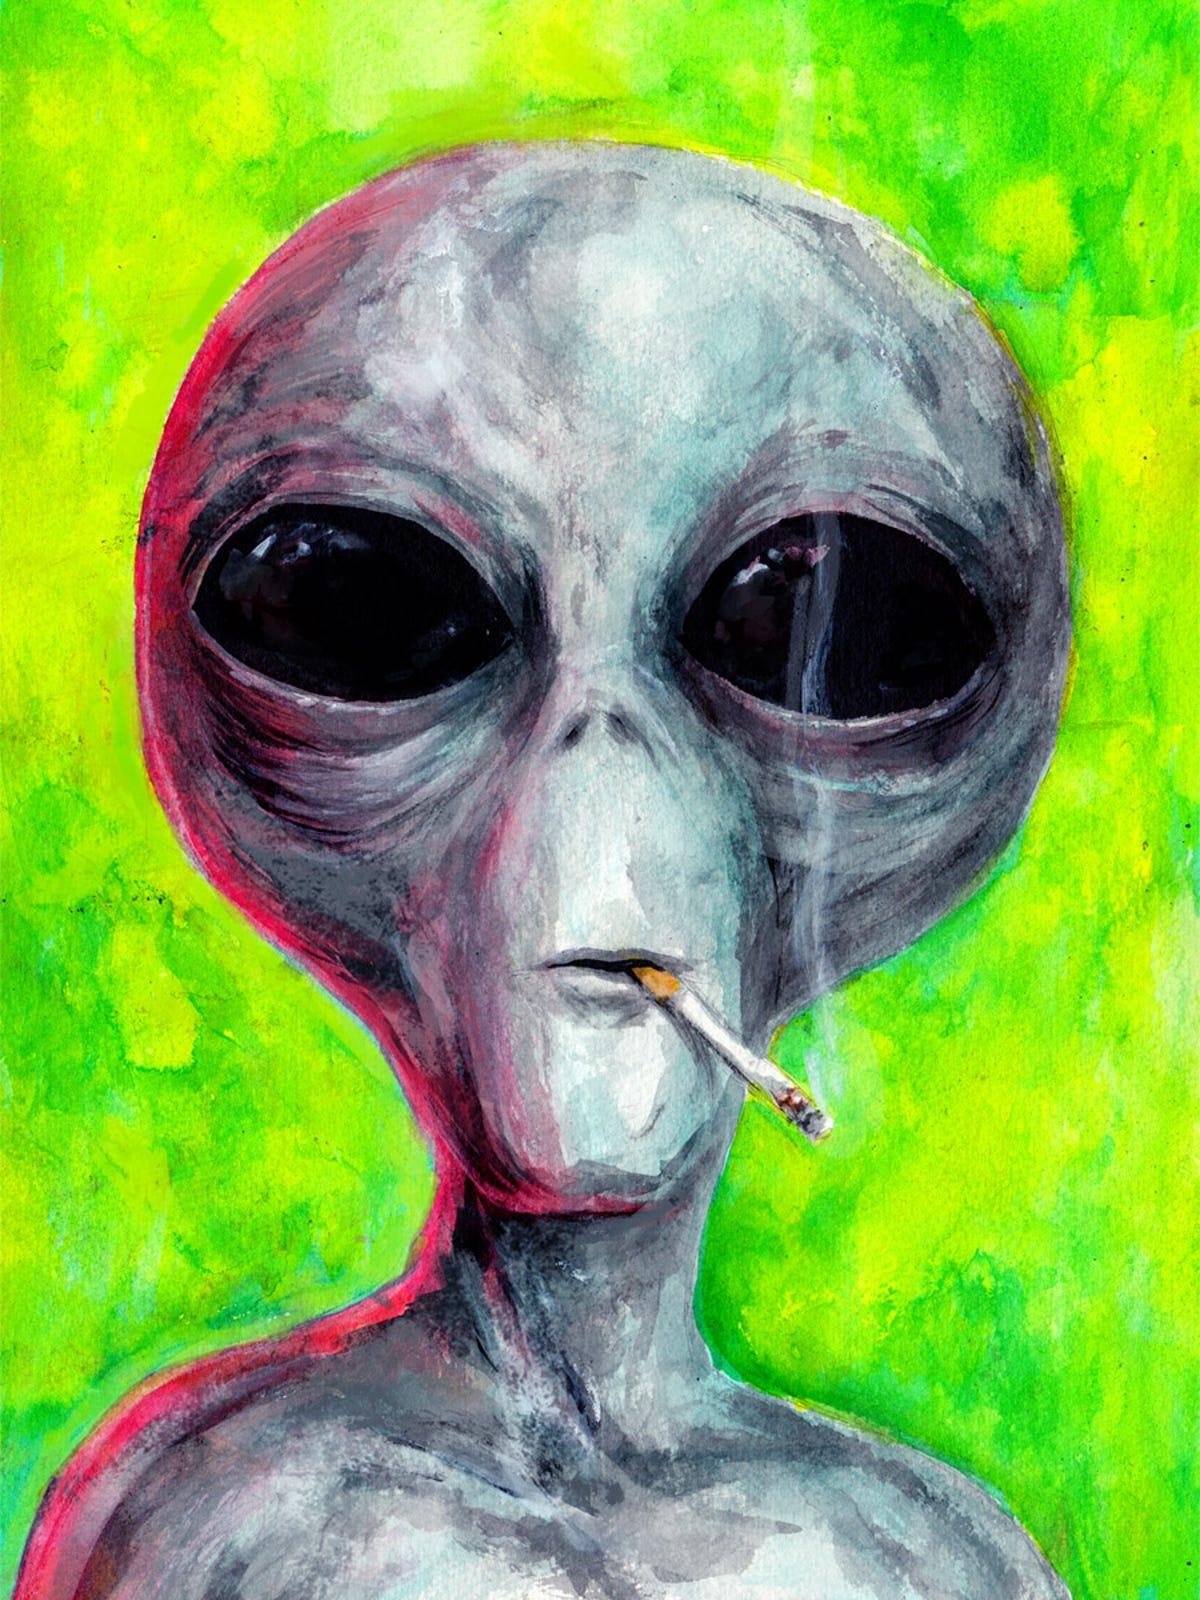 3-x-files-smoking-alien.jpg